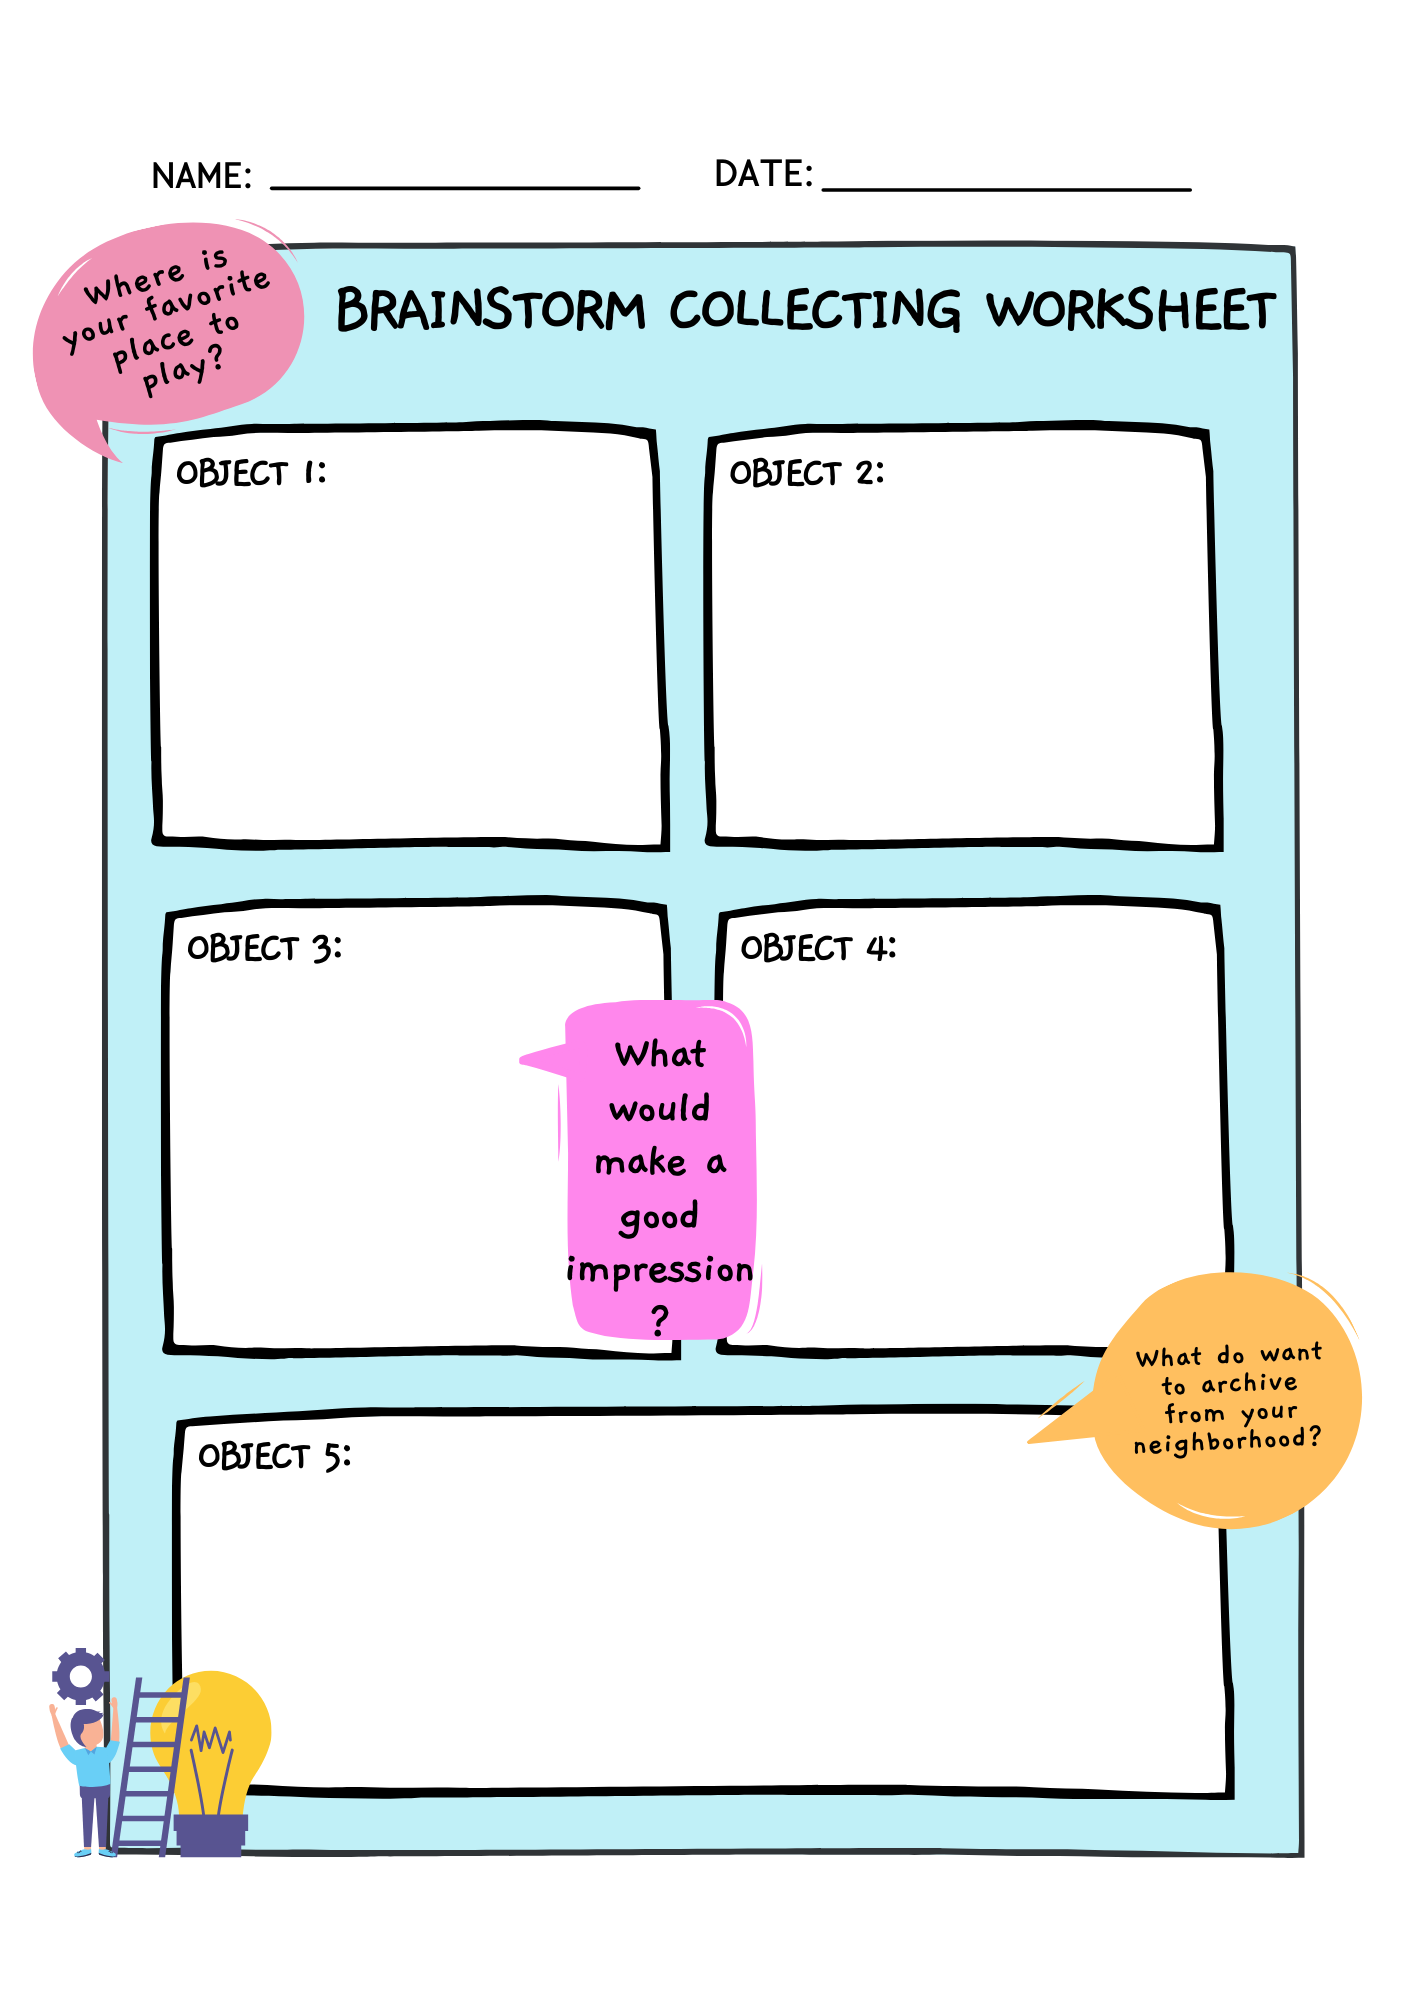 Brainstorm Collecting Worksheet.png